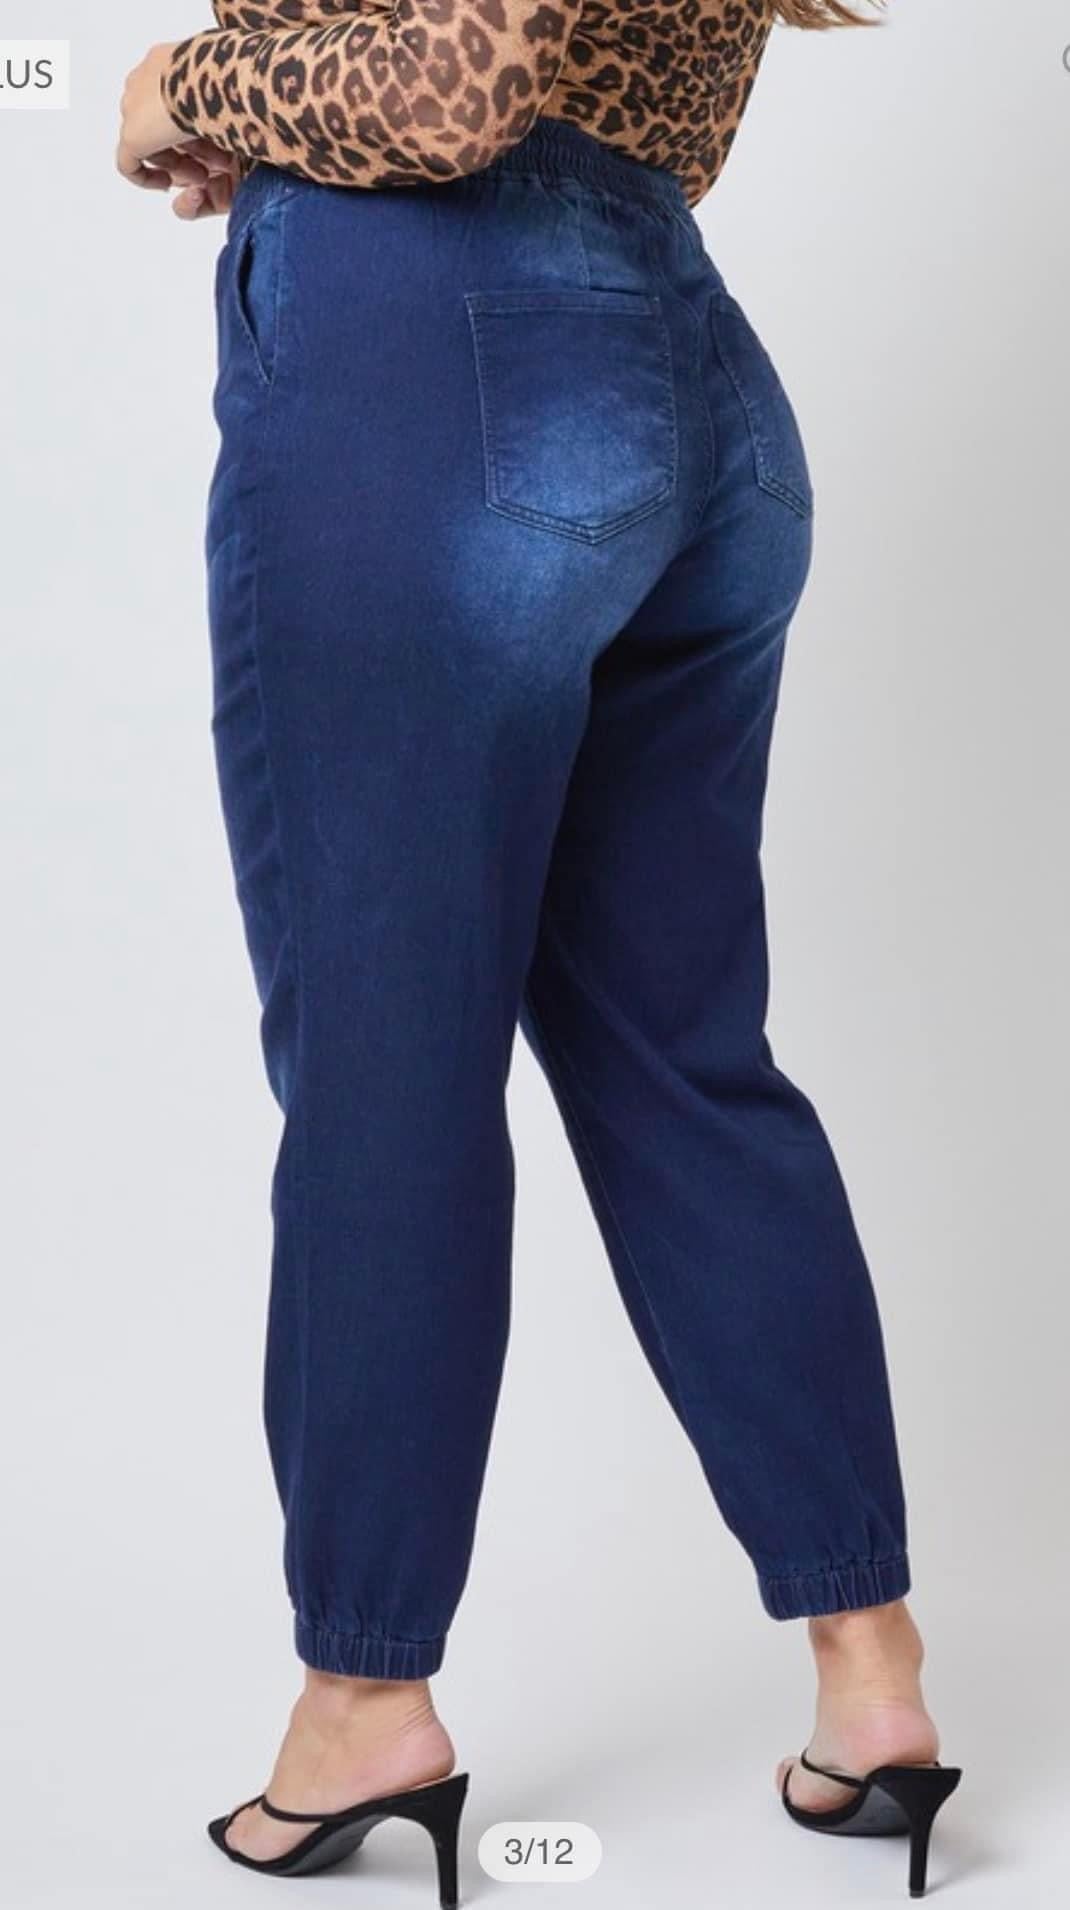 WOMENS PLUS SIZE Camouflage Skinny Blue Black DENIM JEANS Cargo joggers  PANTS | eBay